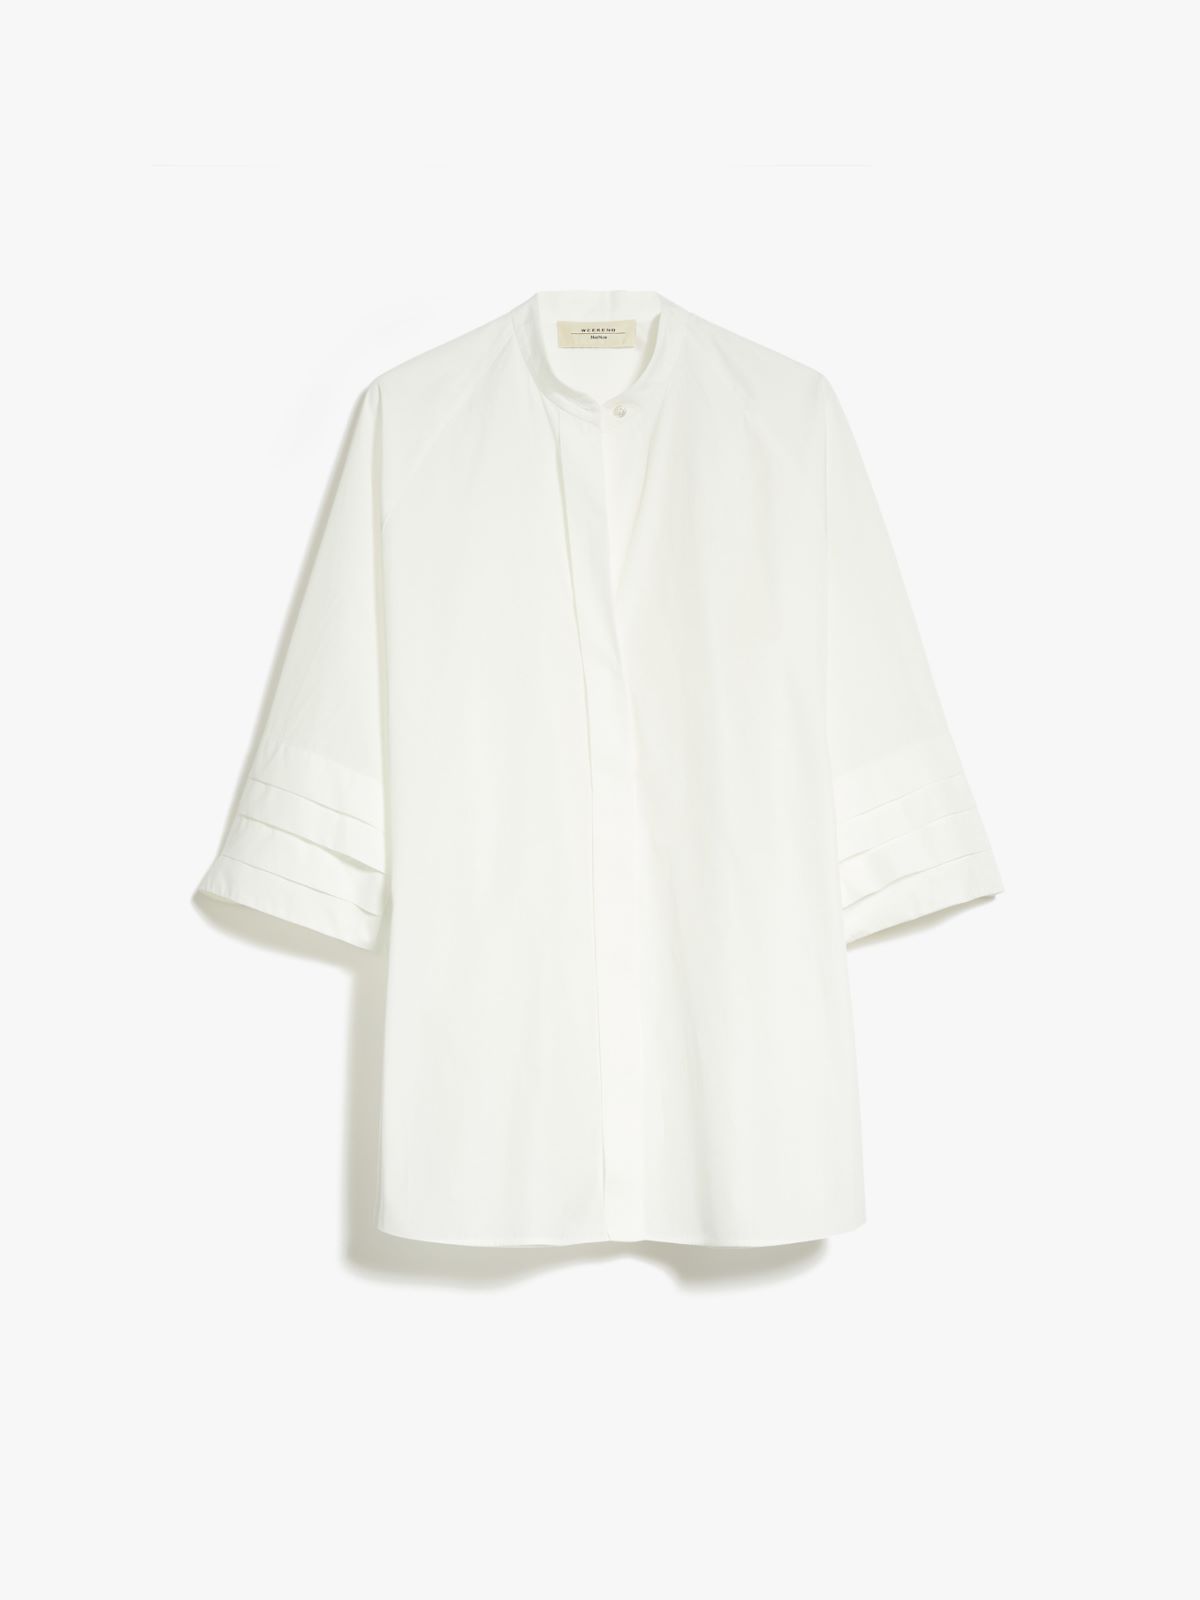 Cotton poplin shirt, white | Weekend Max Mara